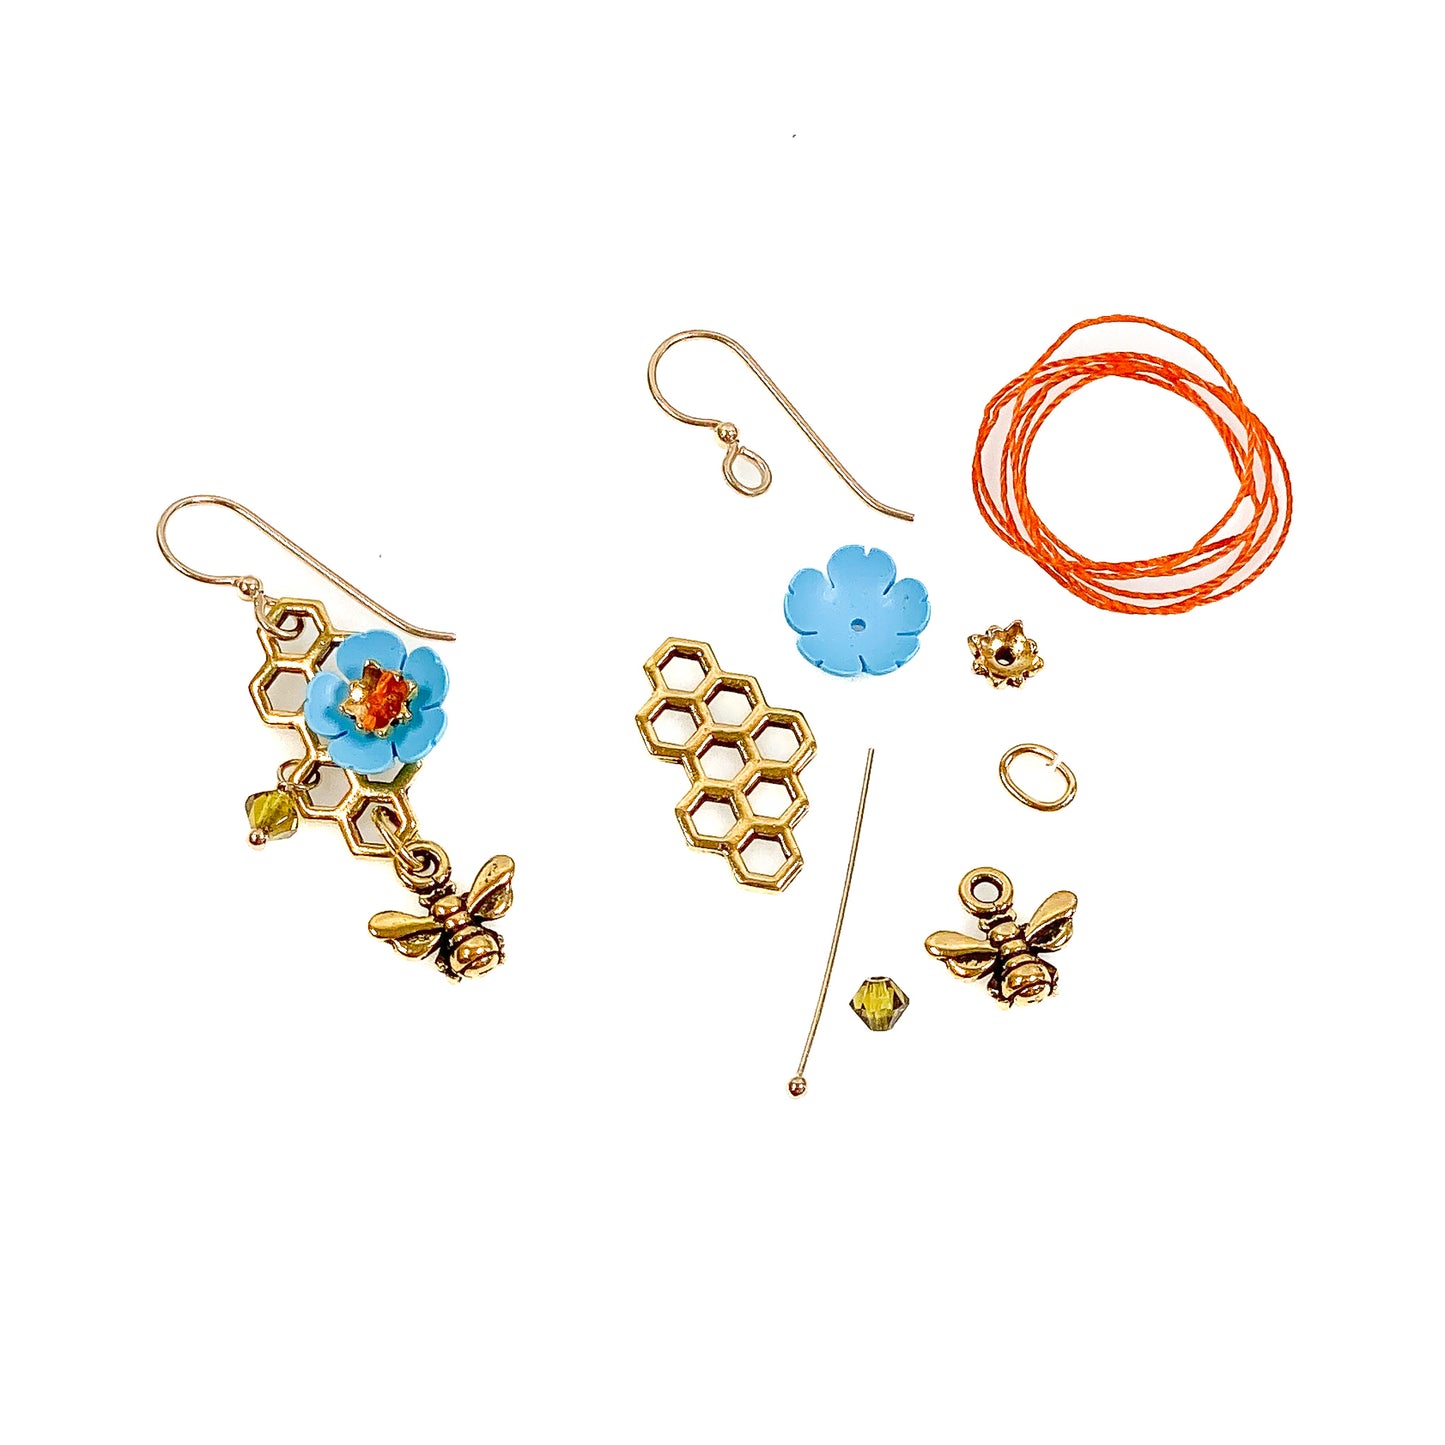 Honeybee Earring Kit - 3 Colors Available